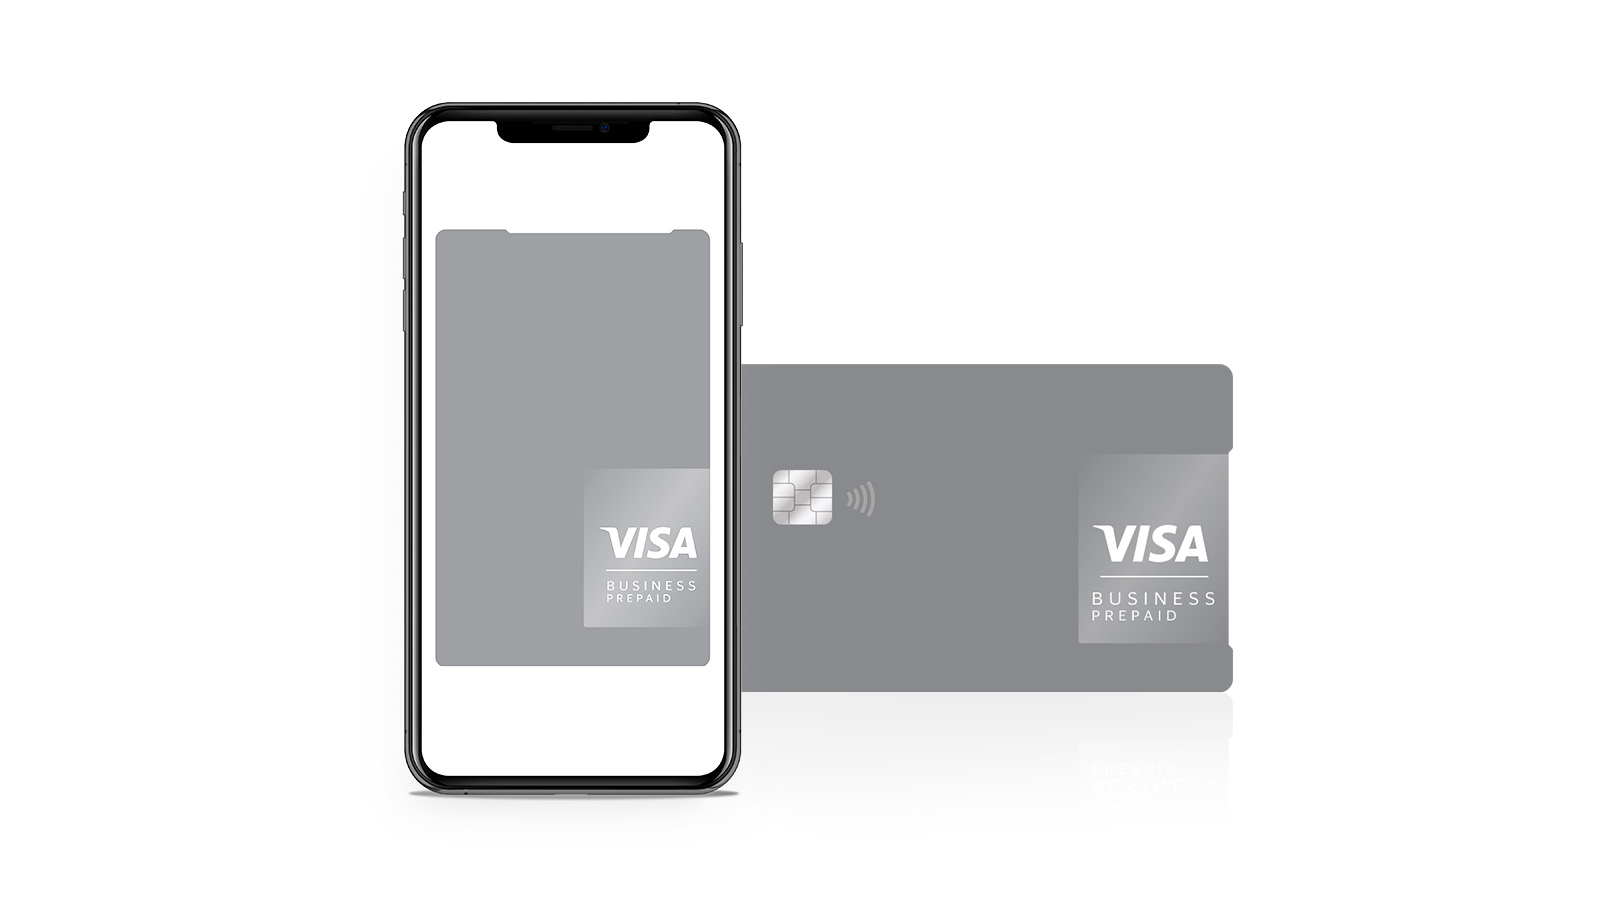 visa business prepaid card and mobile